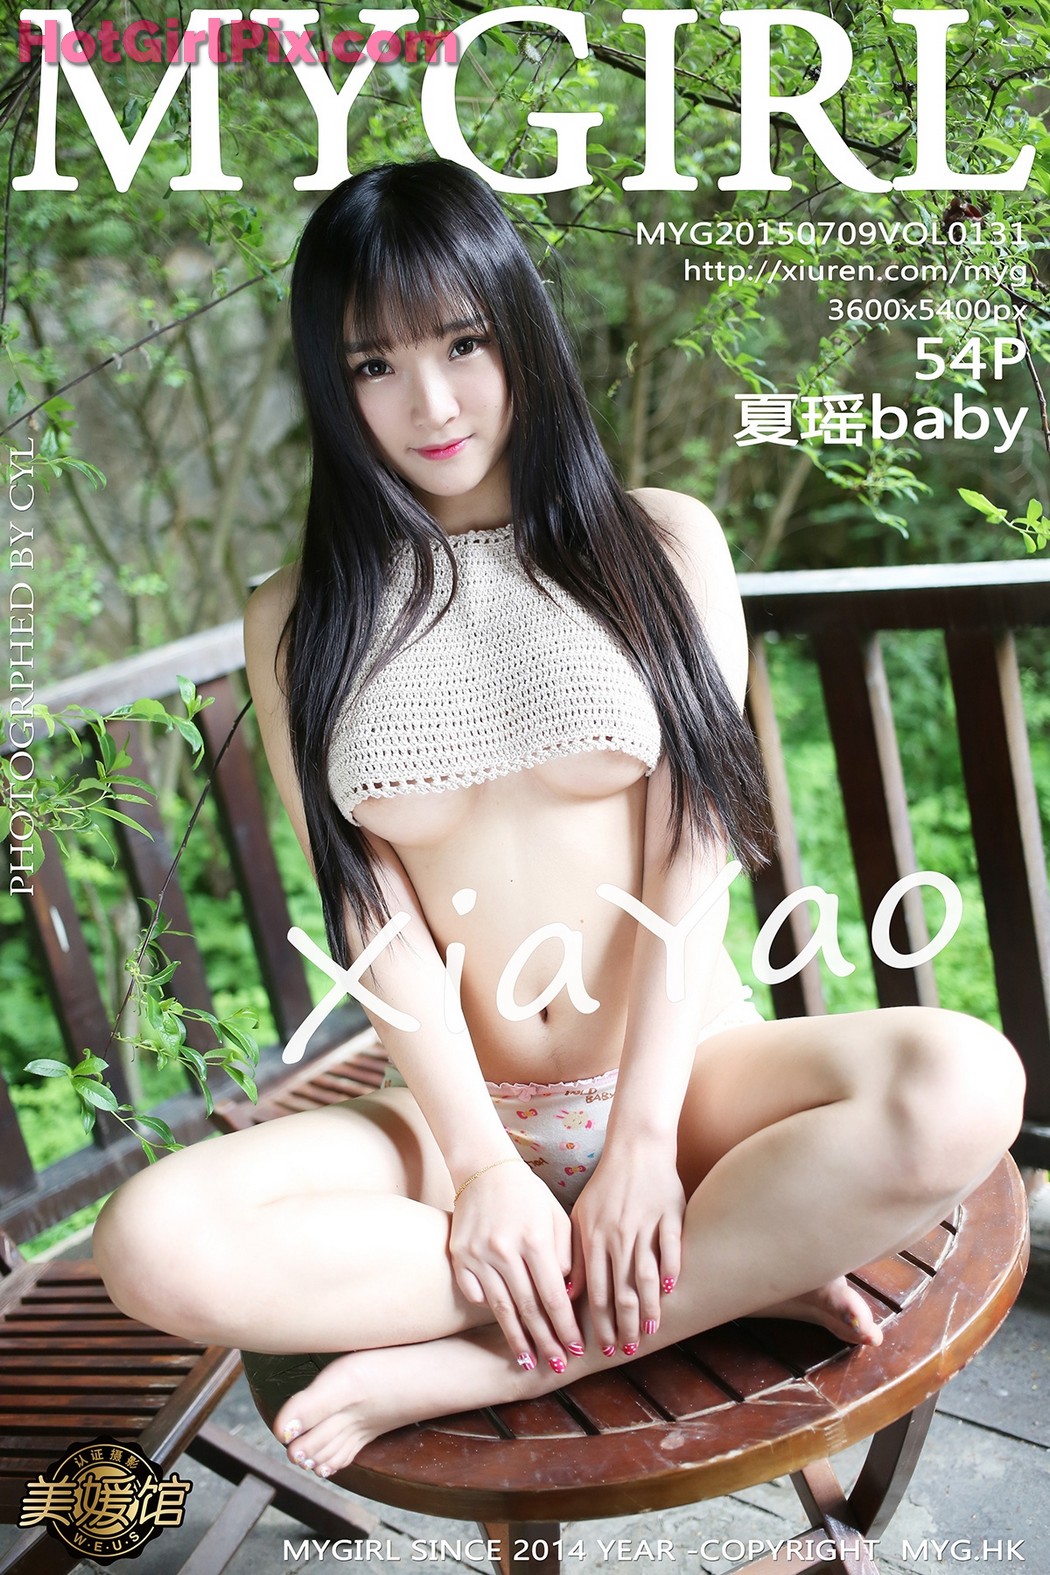 [MyGirl] VOL.131 Xia Yao 夏瑶baby Cover Photo